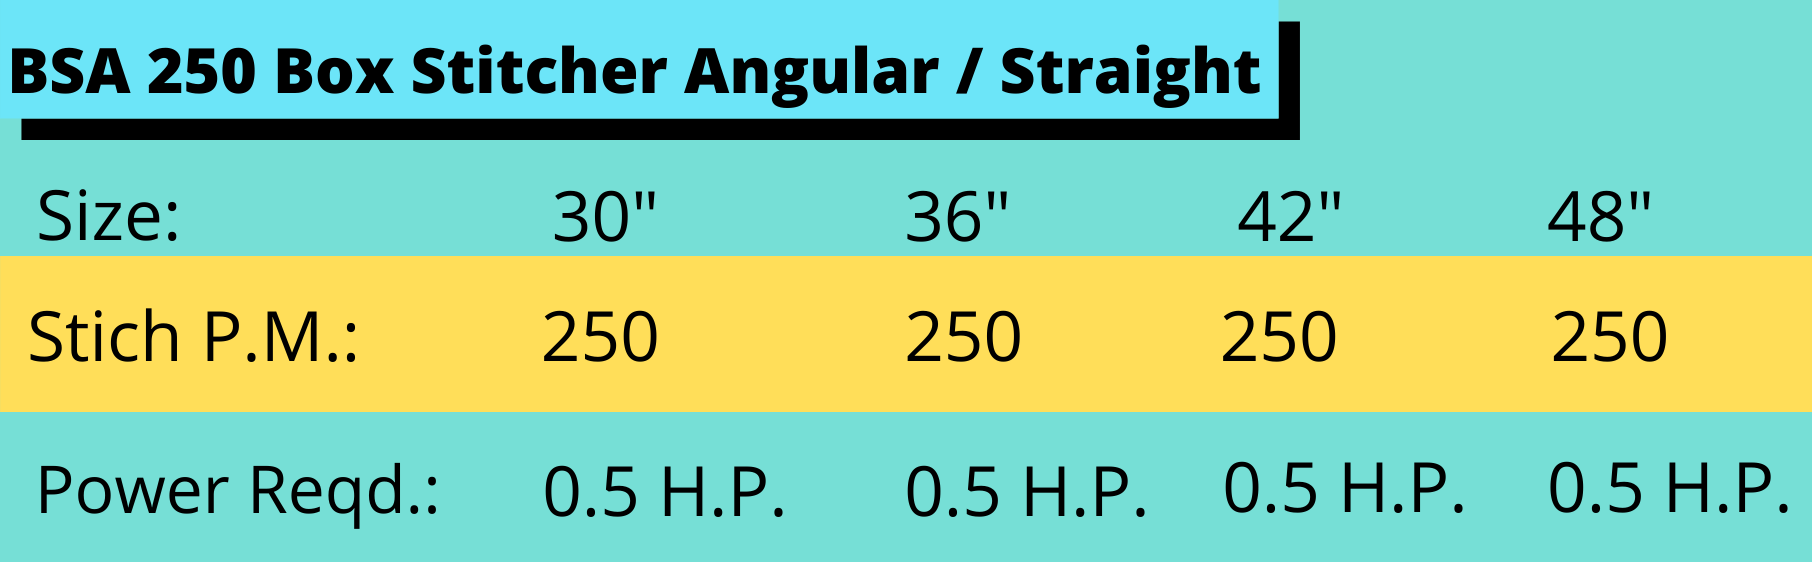 BSA 250 Box Sticher Angular /Straight